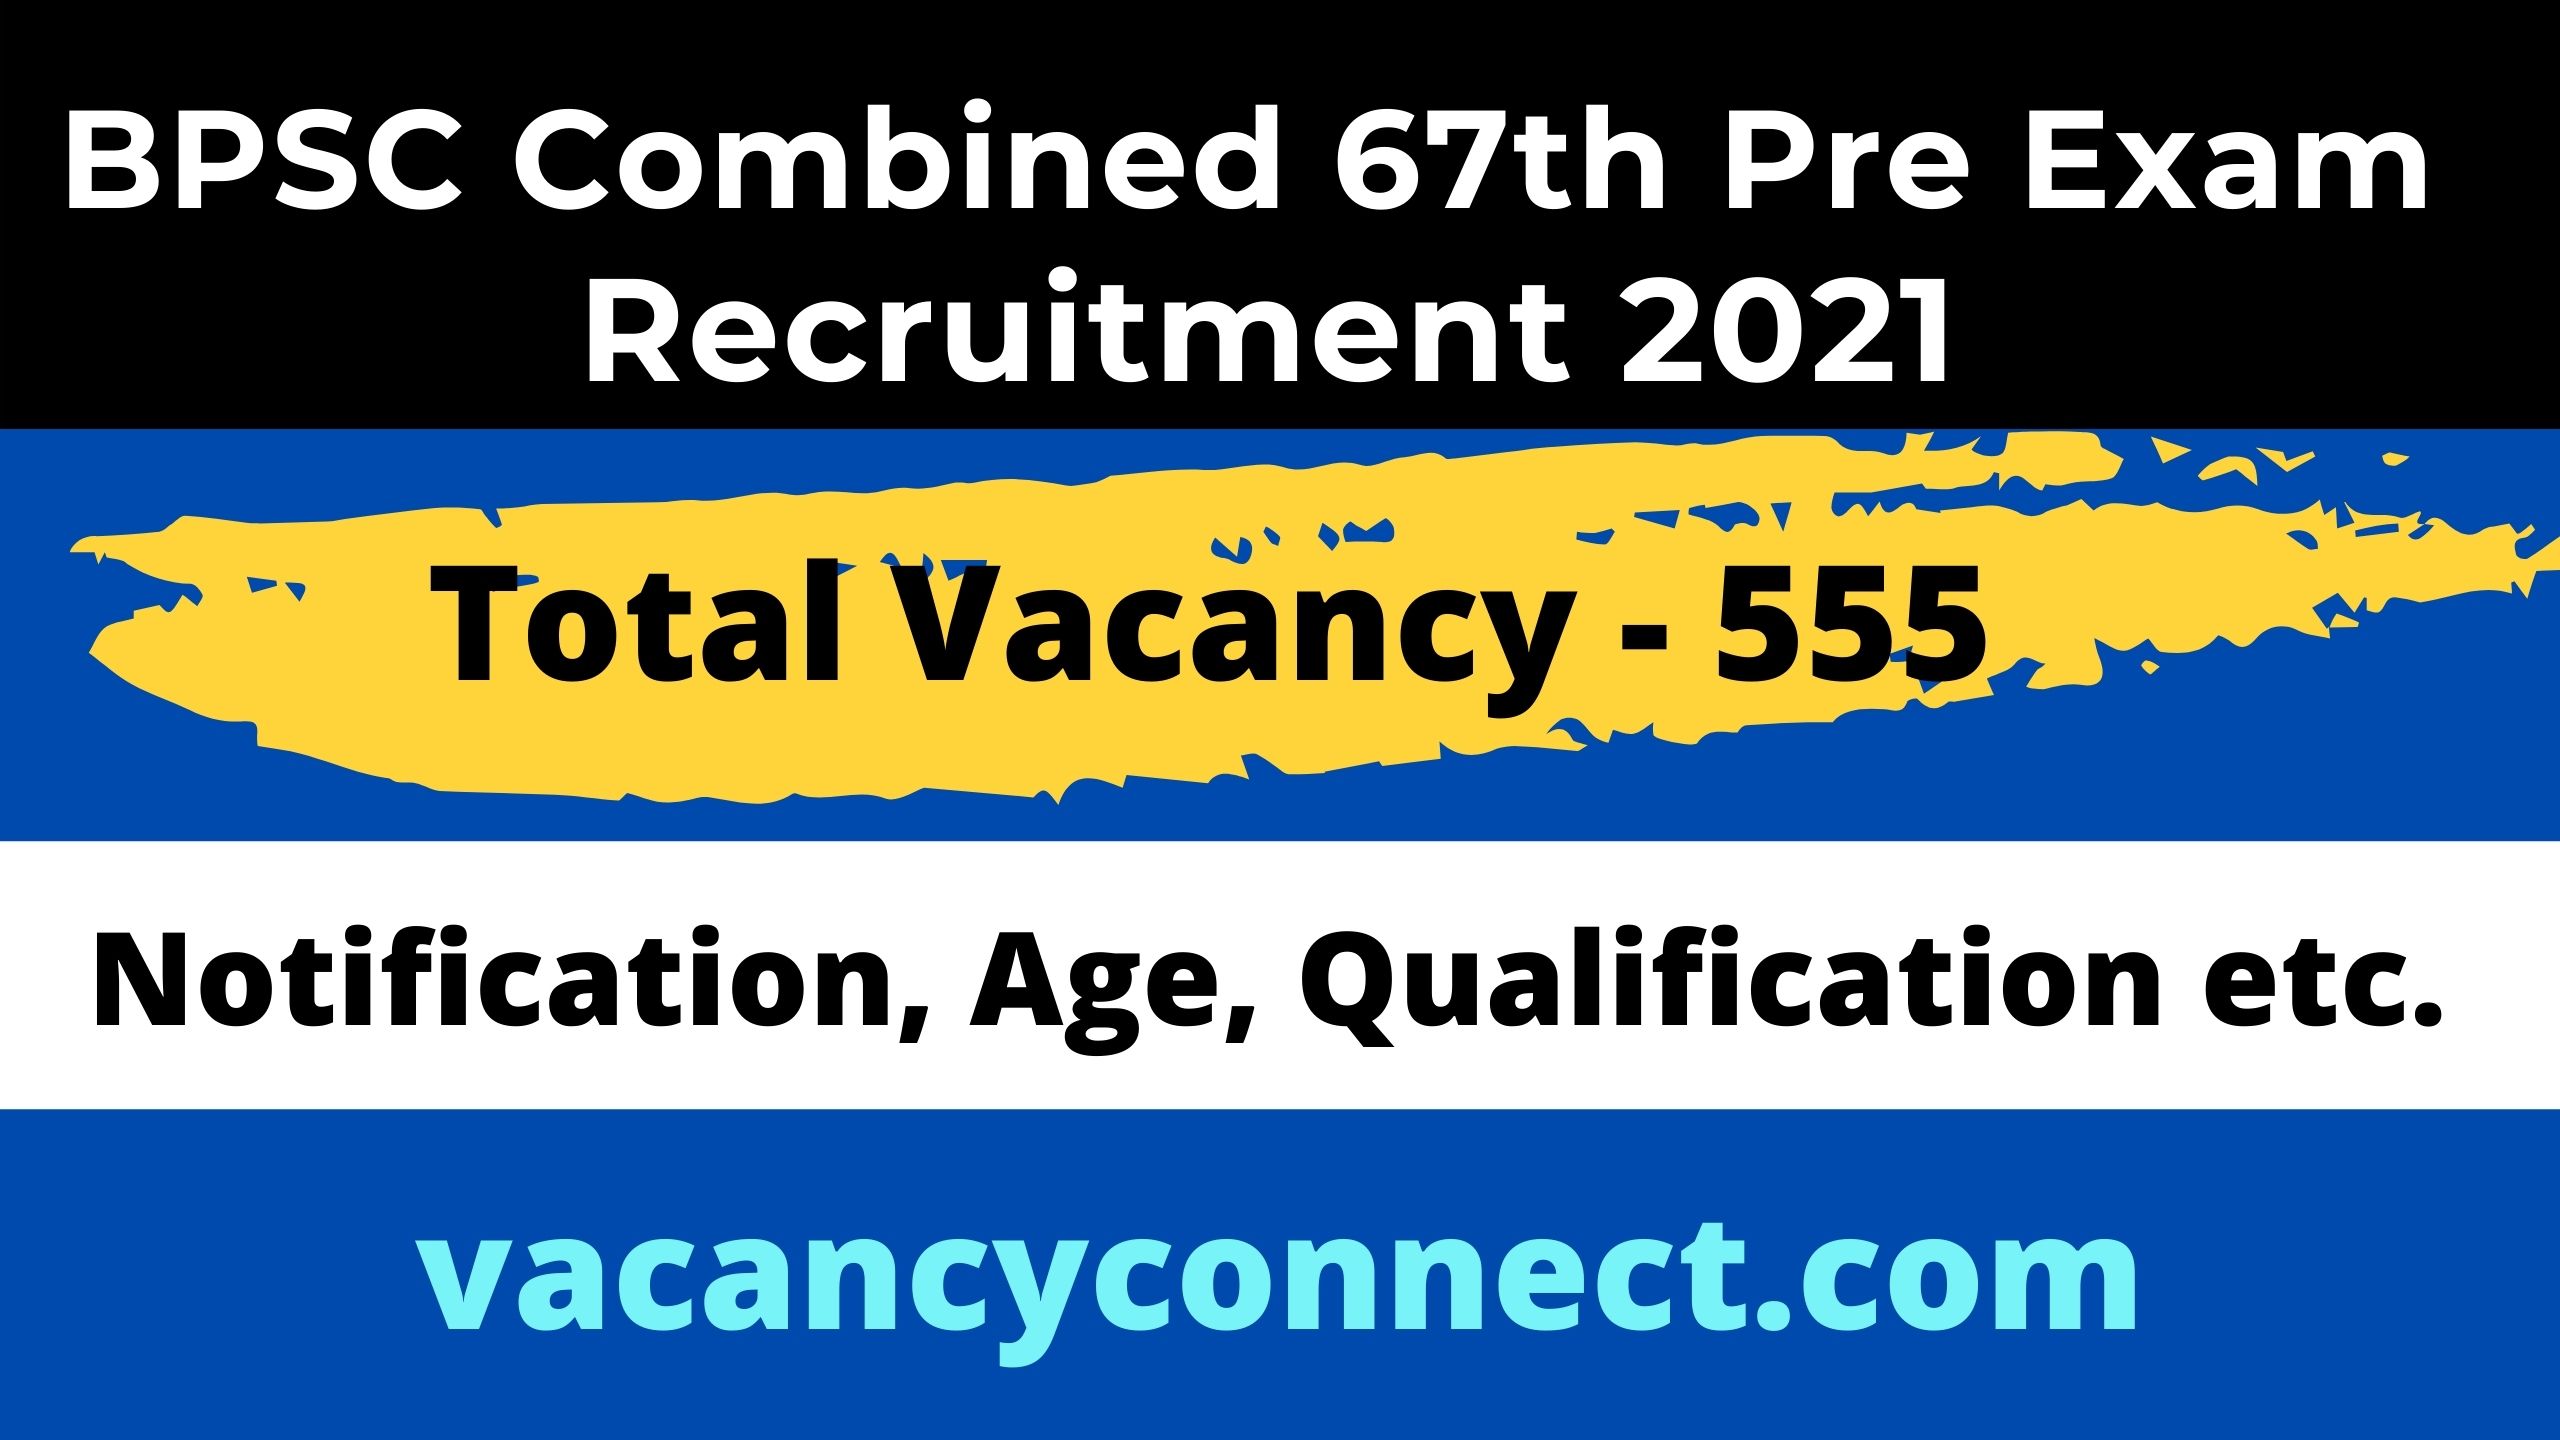 BPSC Combined 67th Pre Exam Recruitment 2021